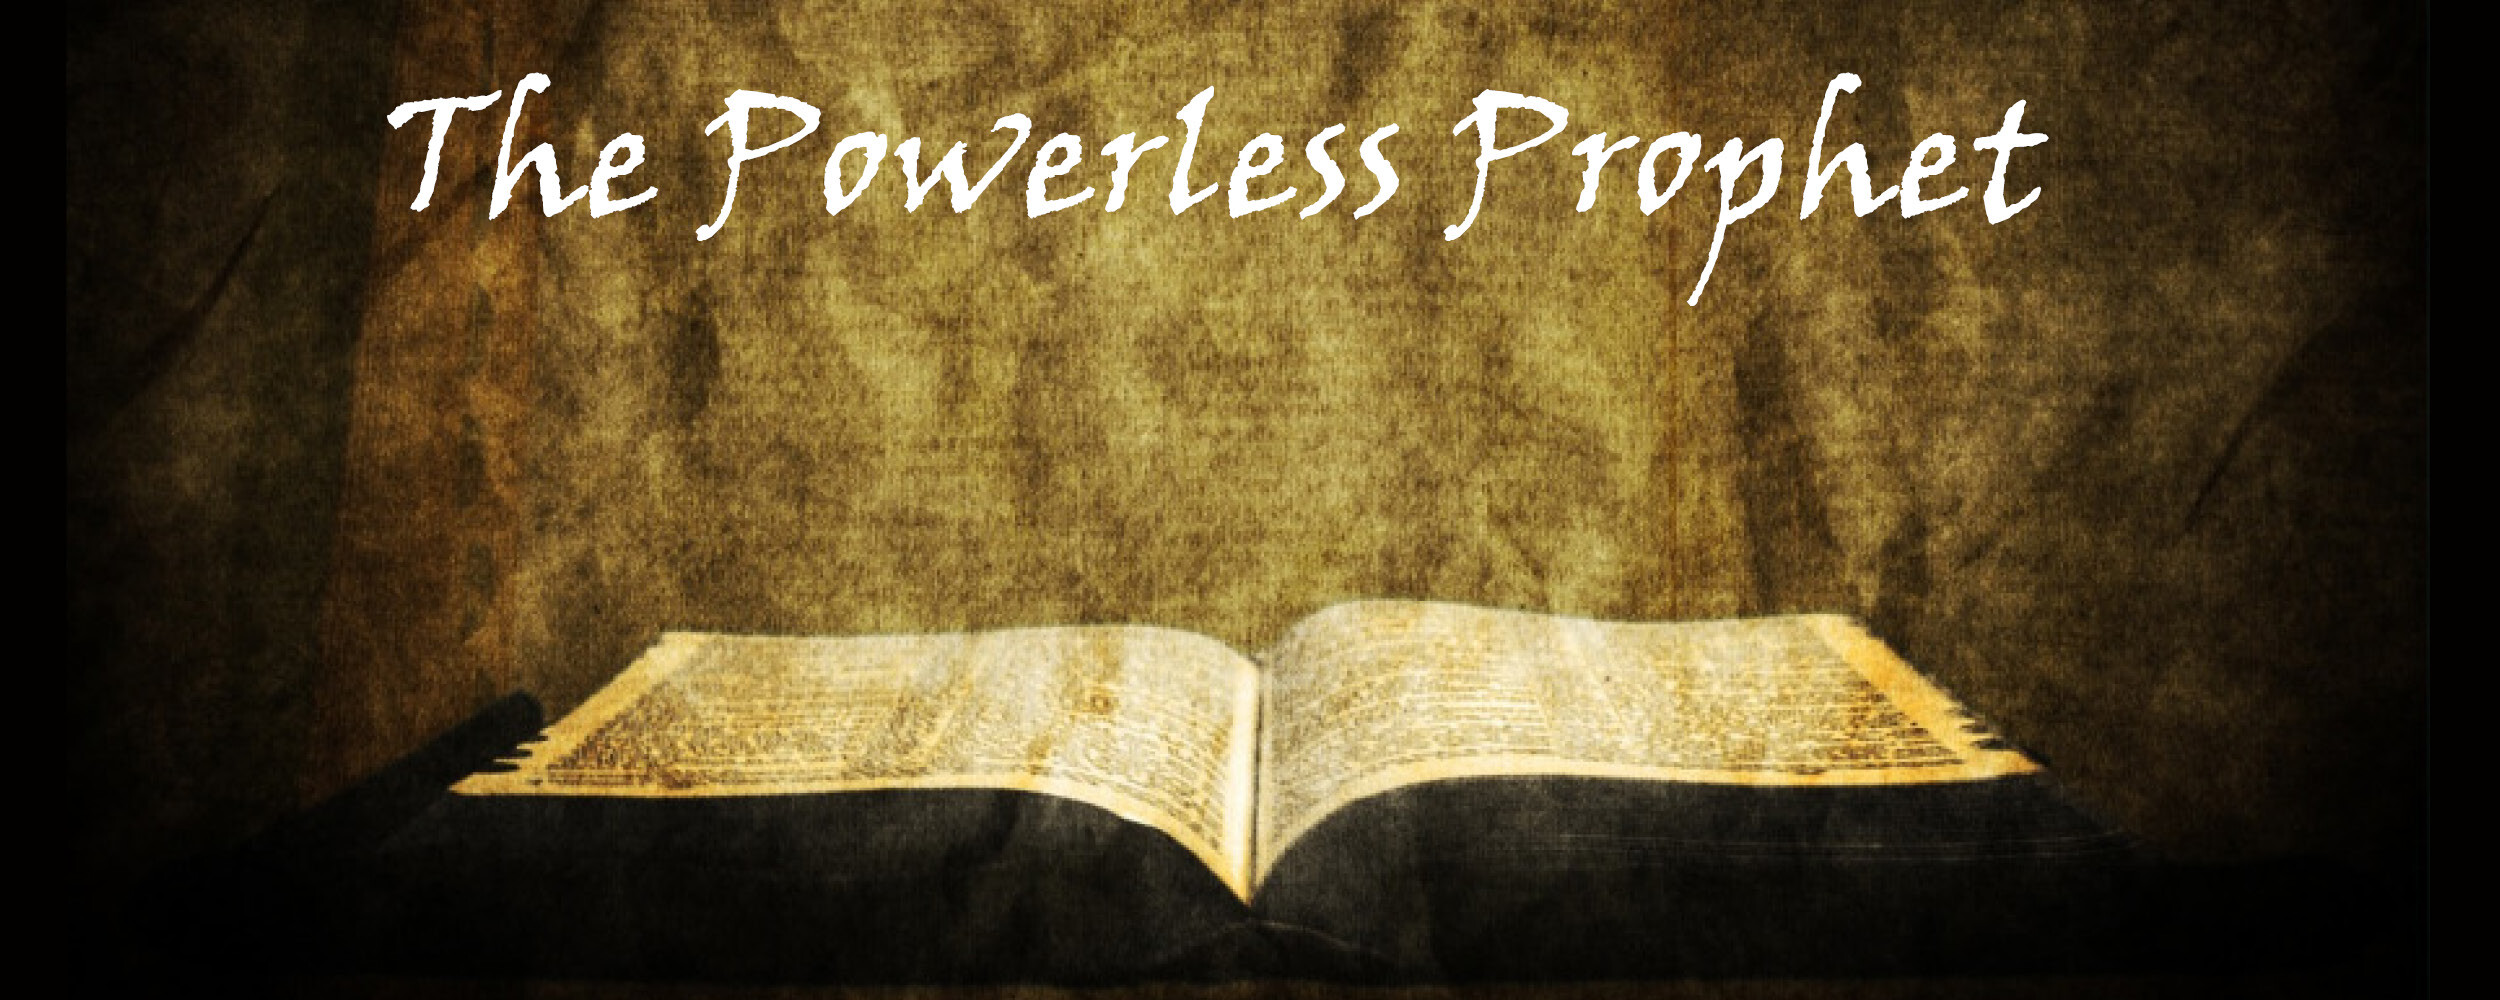 The Powerless Prophet